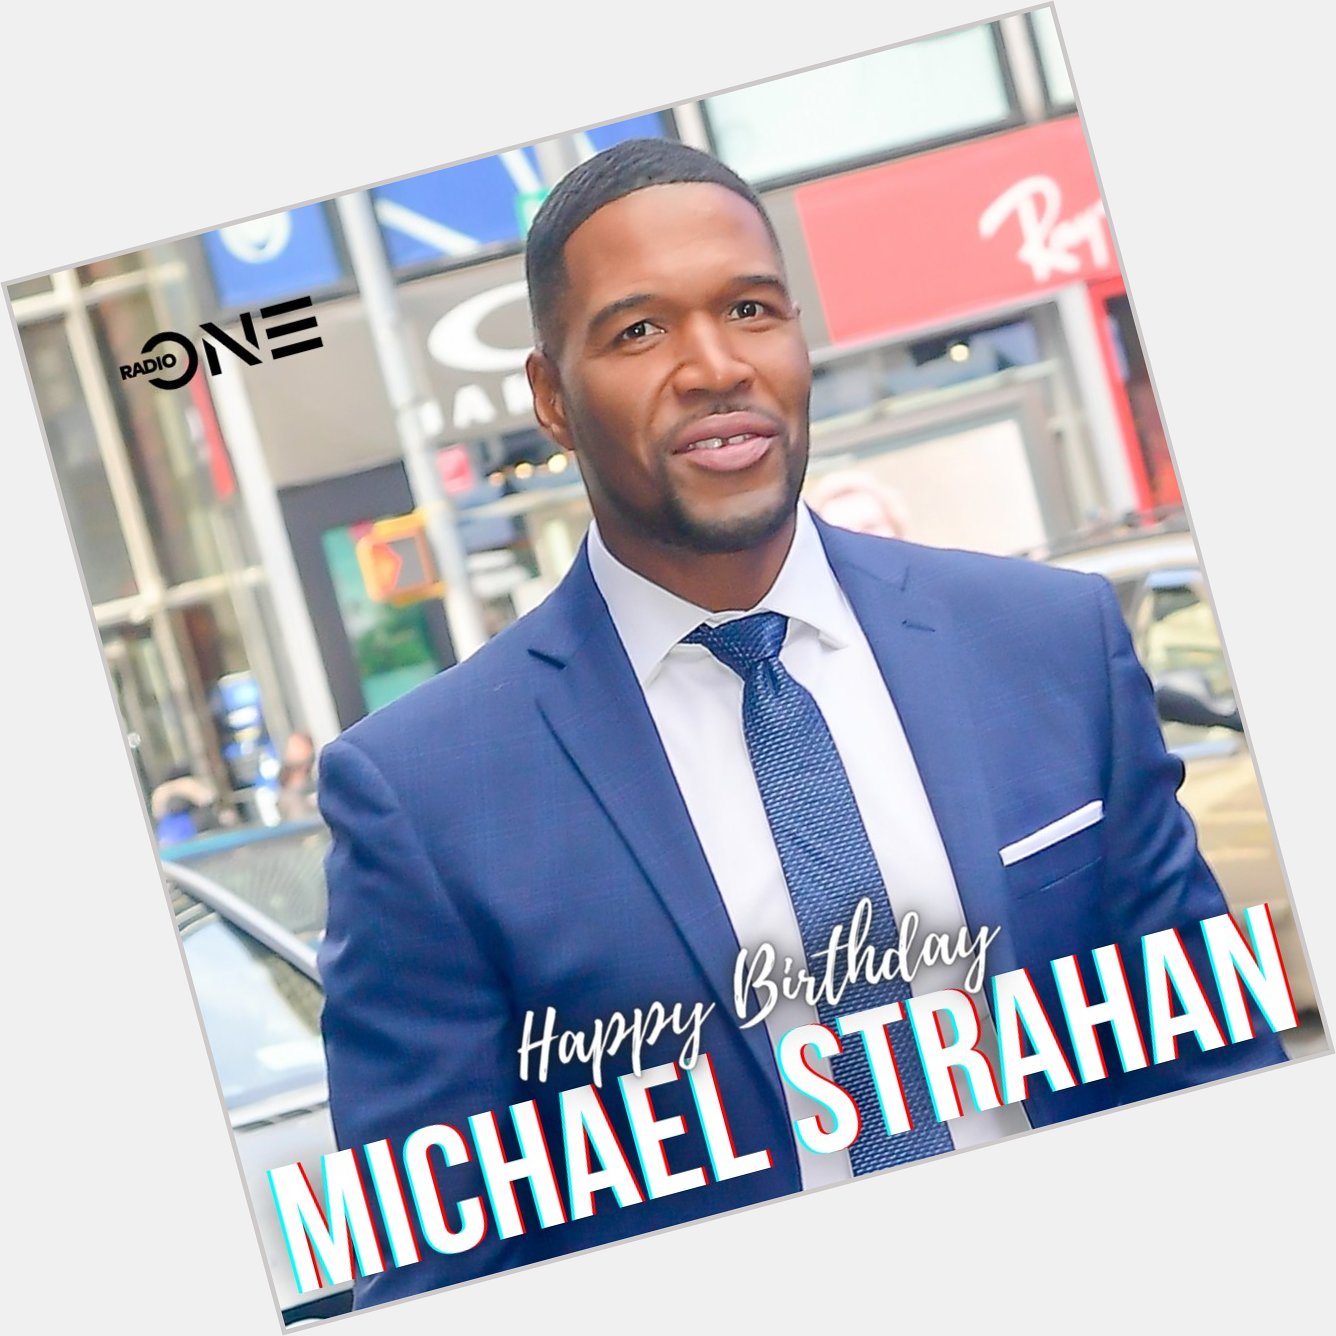 Sending happy birthday wishes to Michael Strahan!! 